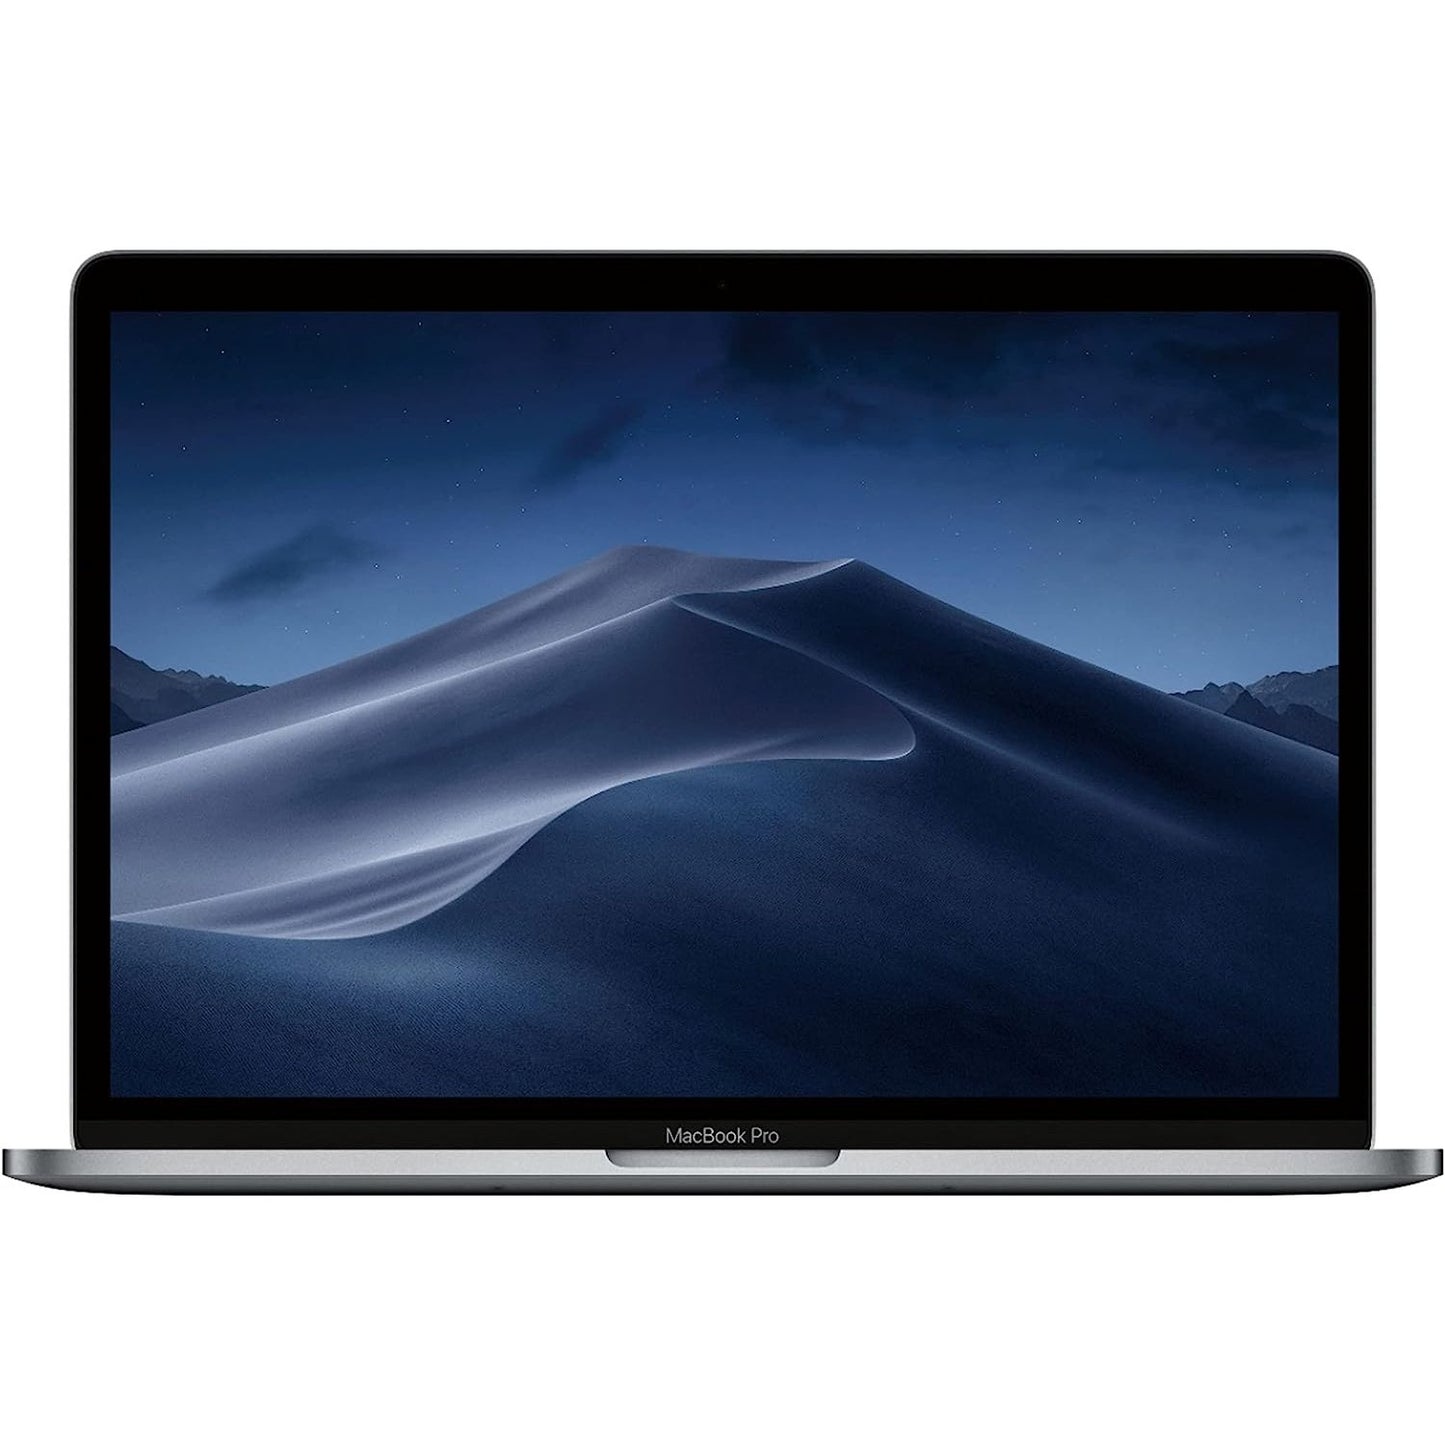 Macbook Pro 15" 2017 - Touch Bar (2.8GHz - Core i7 - 16GB RAM - 512GB SSD - AMD Radeon Pro 560) - Space Gray